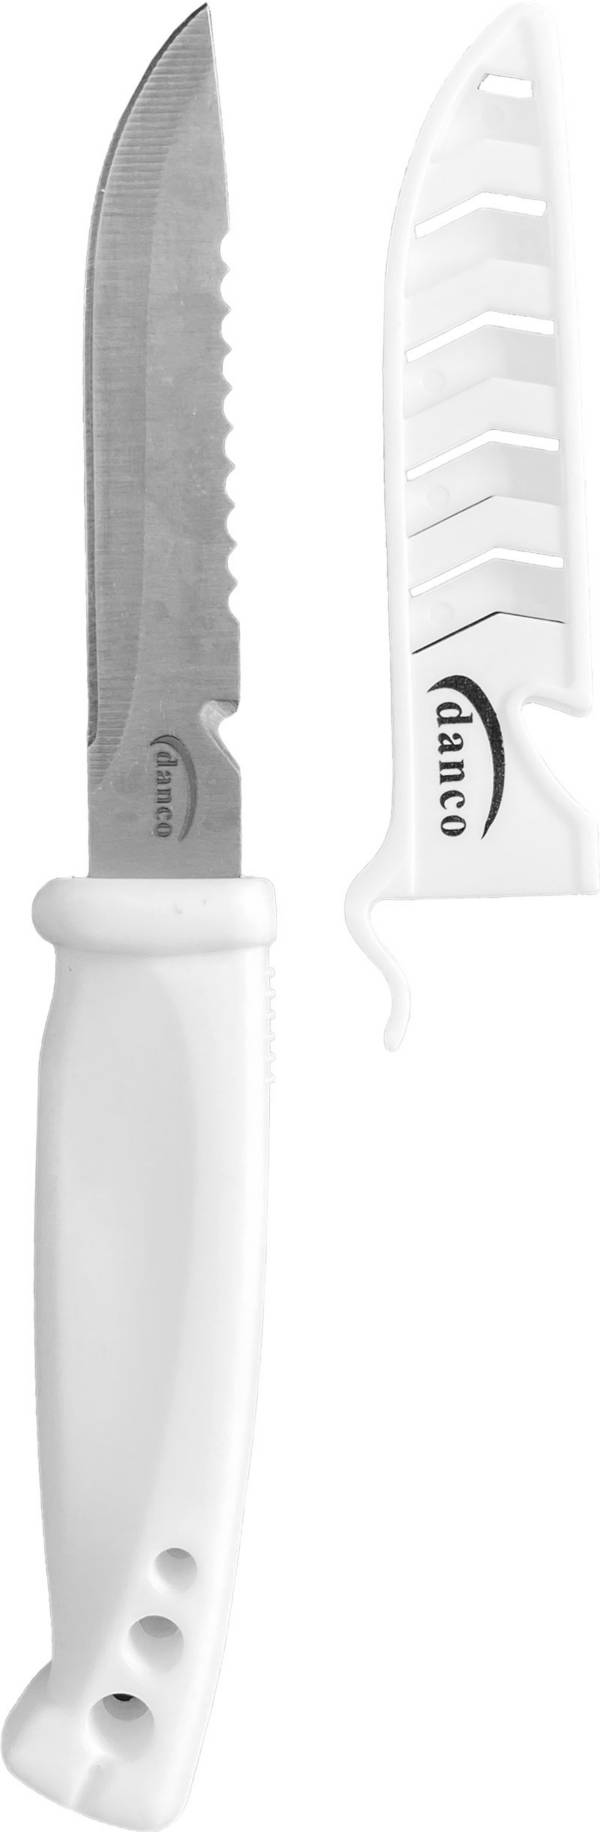 danco 4” Deluxe Bait Knife product image